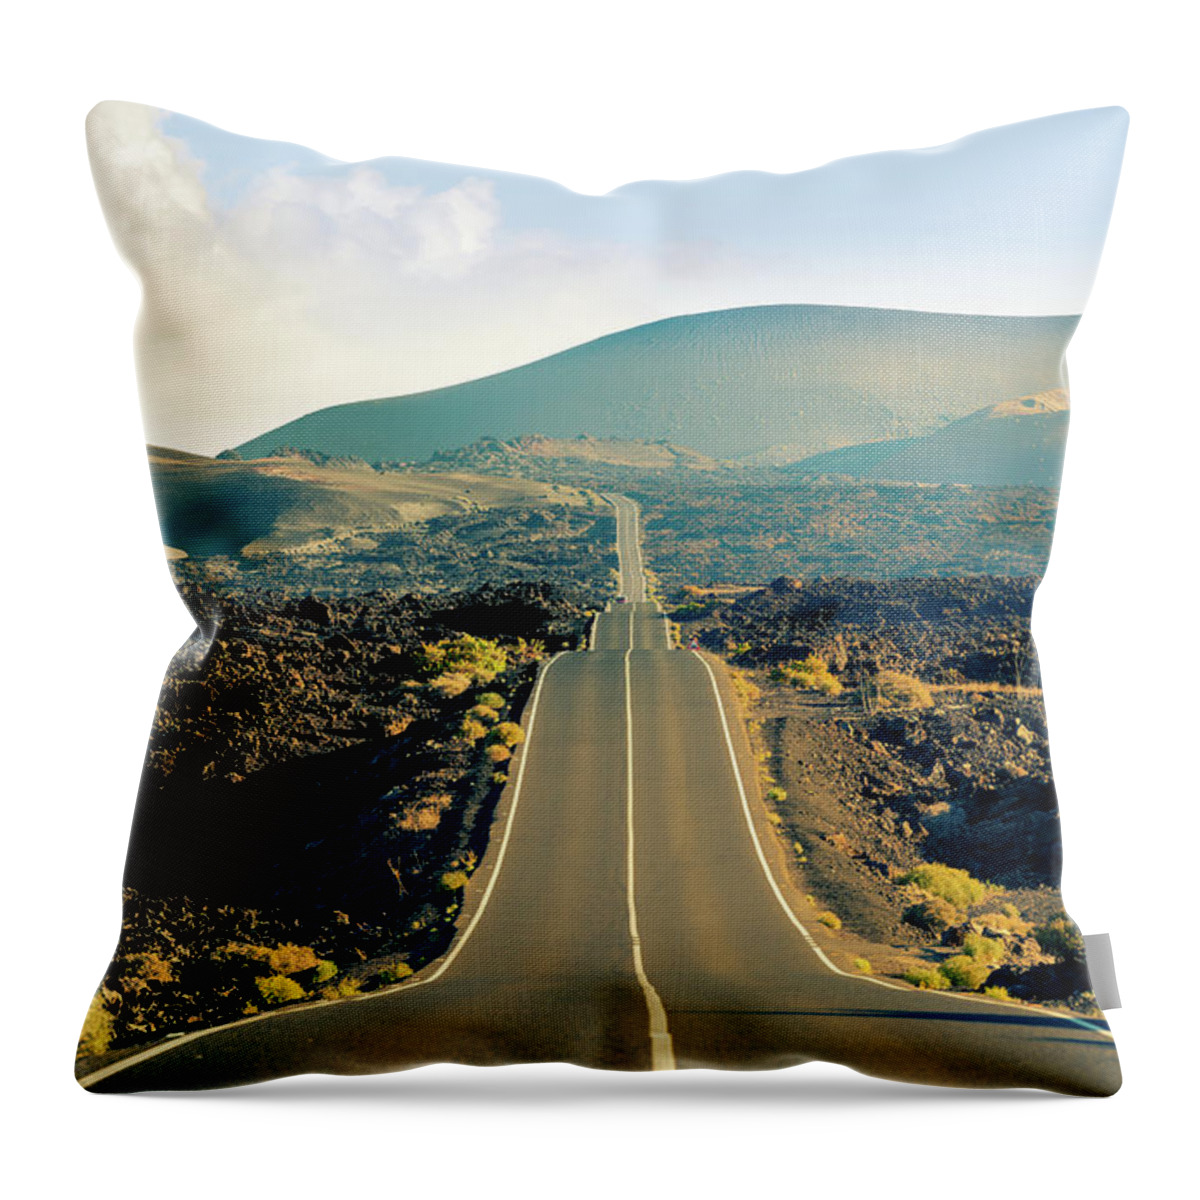 Timanfaya National Park Throw Pillow featuring the photograph Road In Timanfaya National Park, Canary by Zodebala